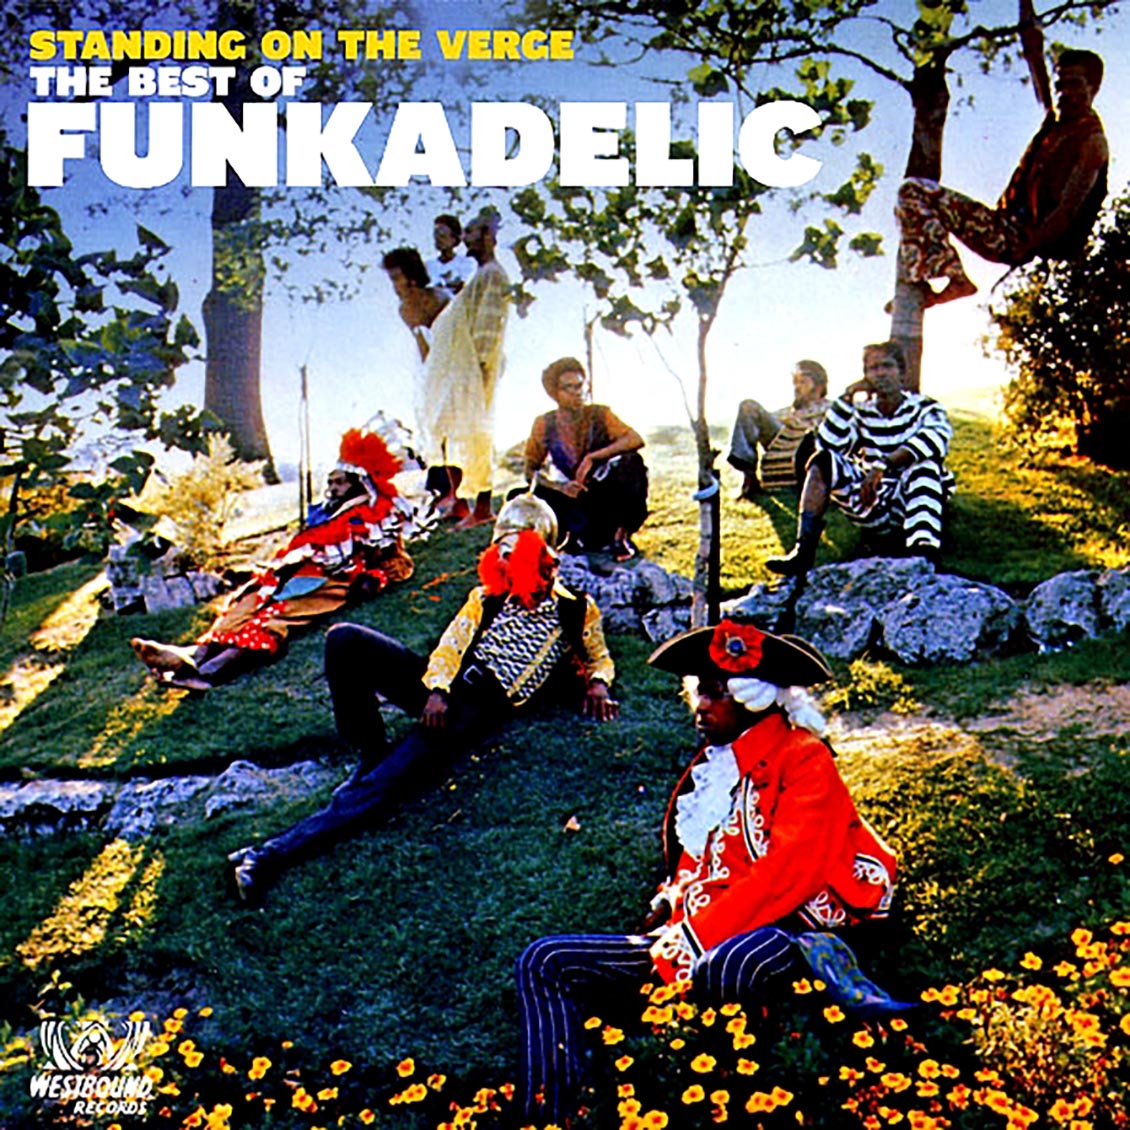 Funkadelic - Standing on the Verge - The Best Of [2009 New Double Vinyl Record LP]